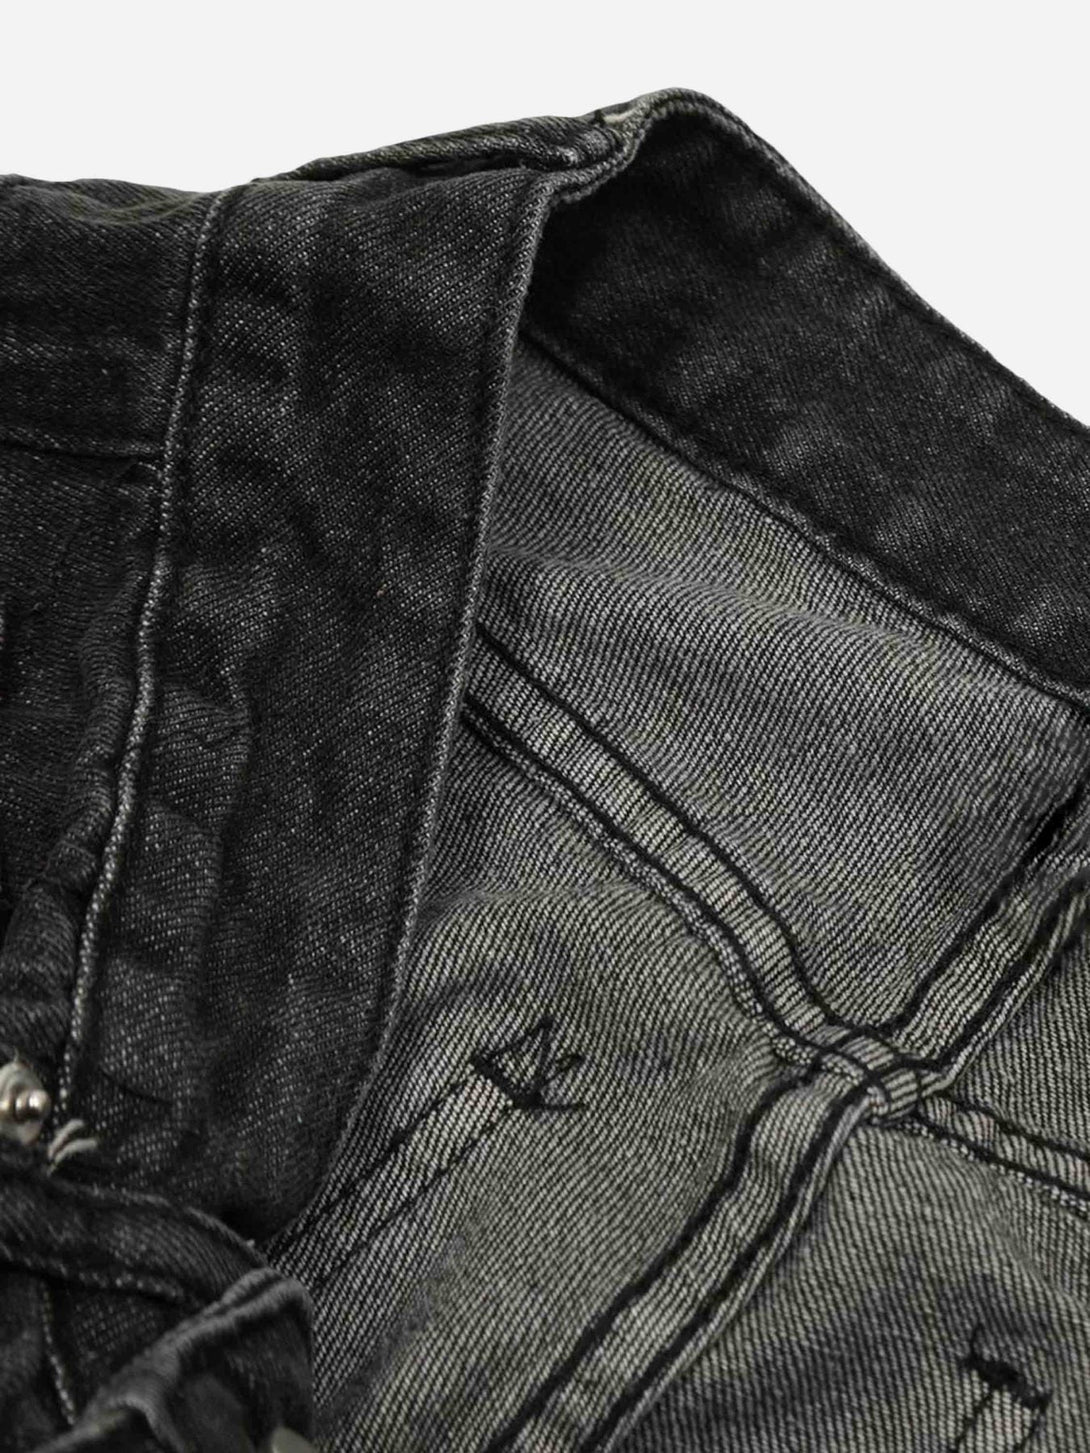 Majesda® - Washed Multi-pocket Work Jeans - 1830- Outfit Ideas - Streetwear Fashion - majesda.com